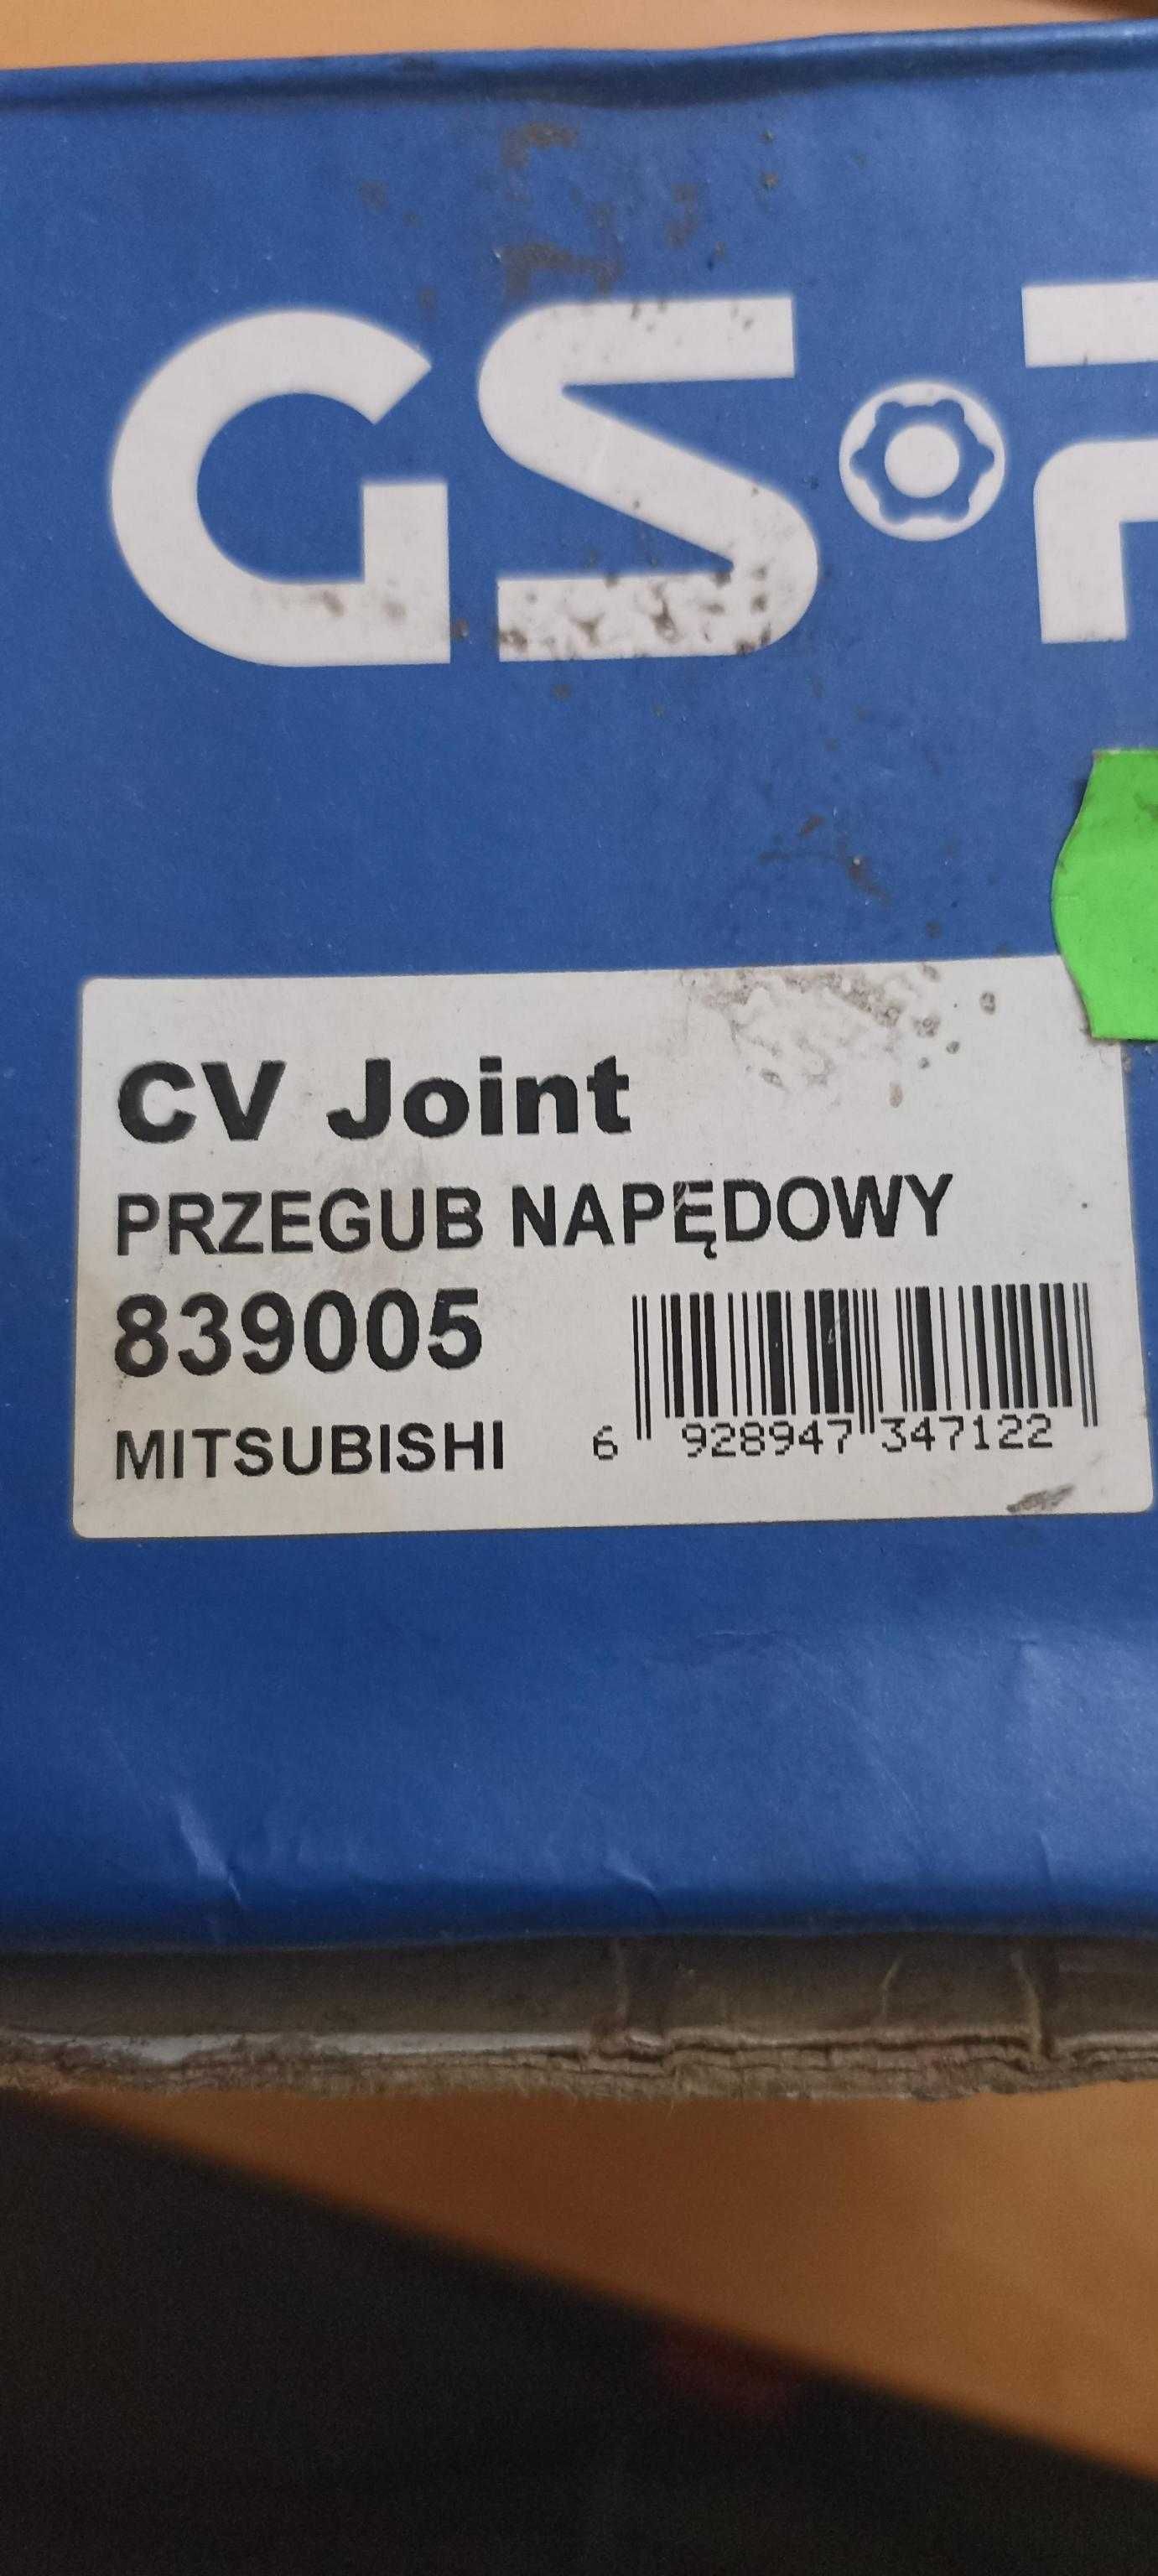 Przegub napędowy CV Joint - 839005 - MITSUBISHI